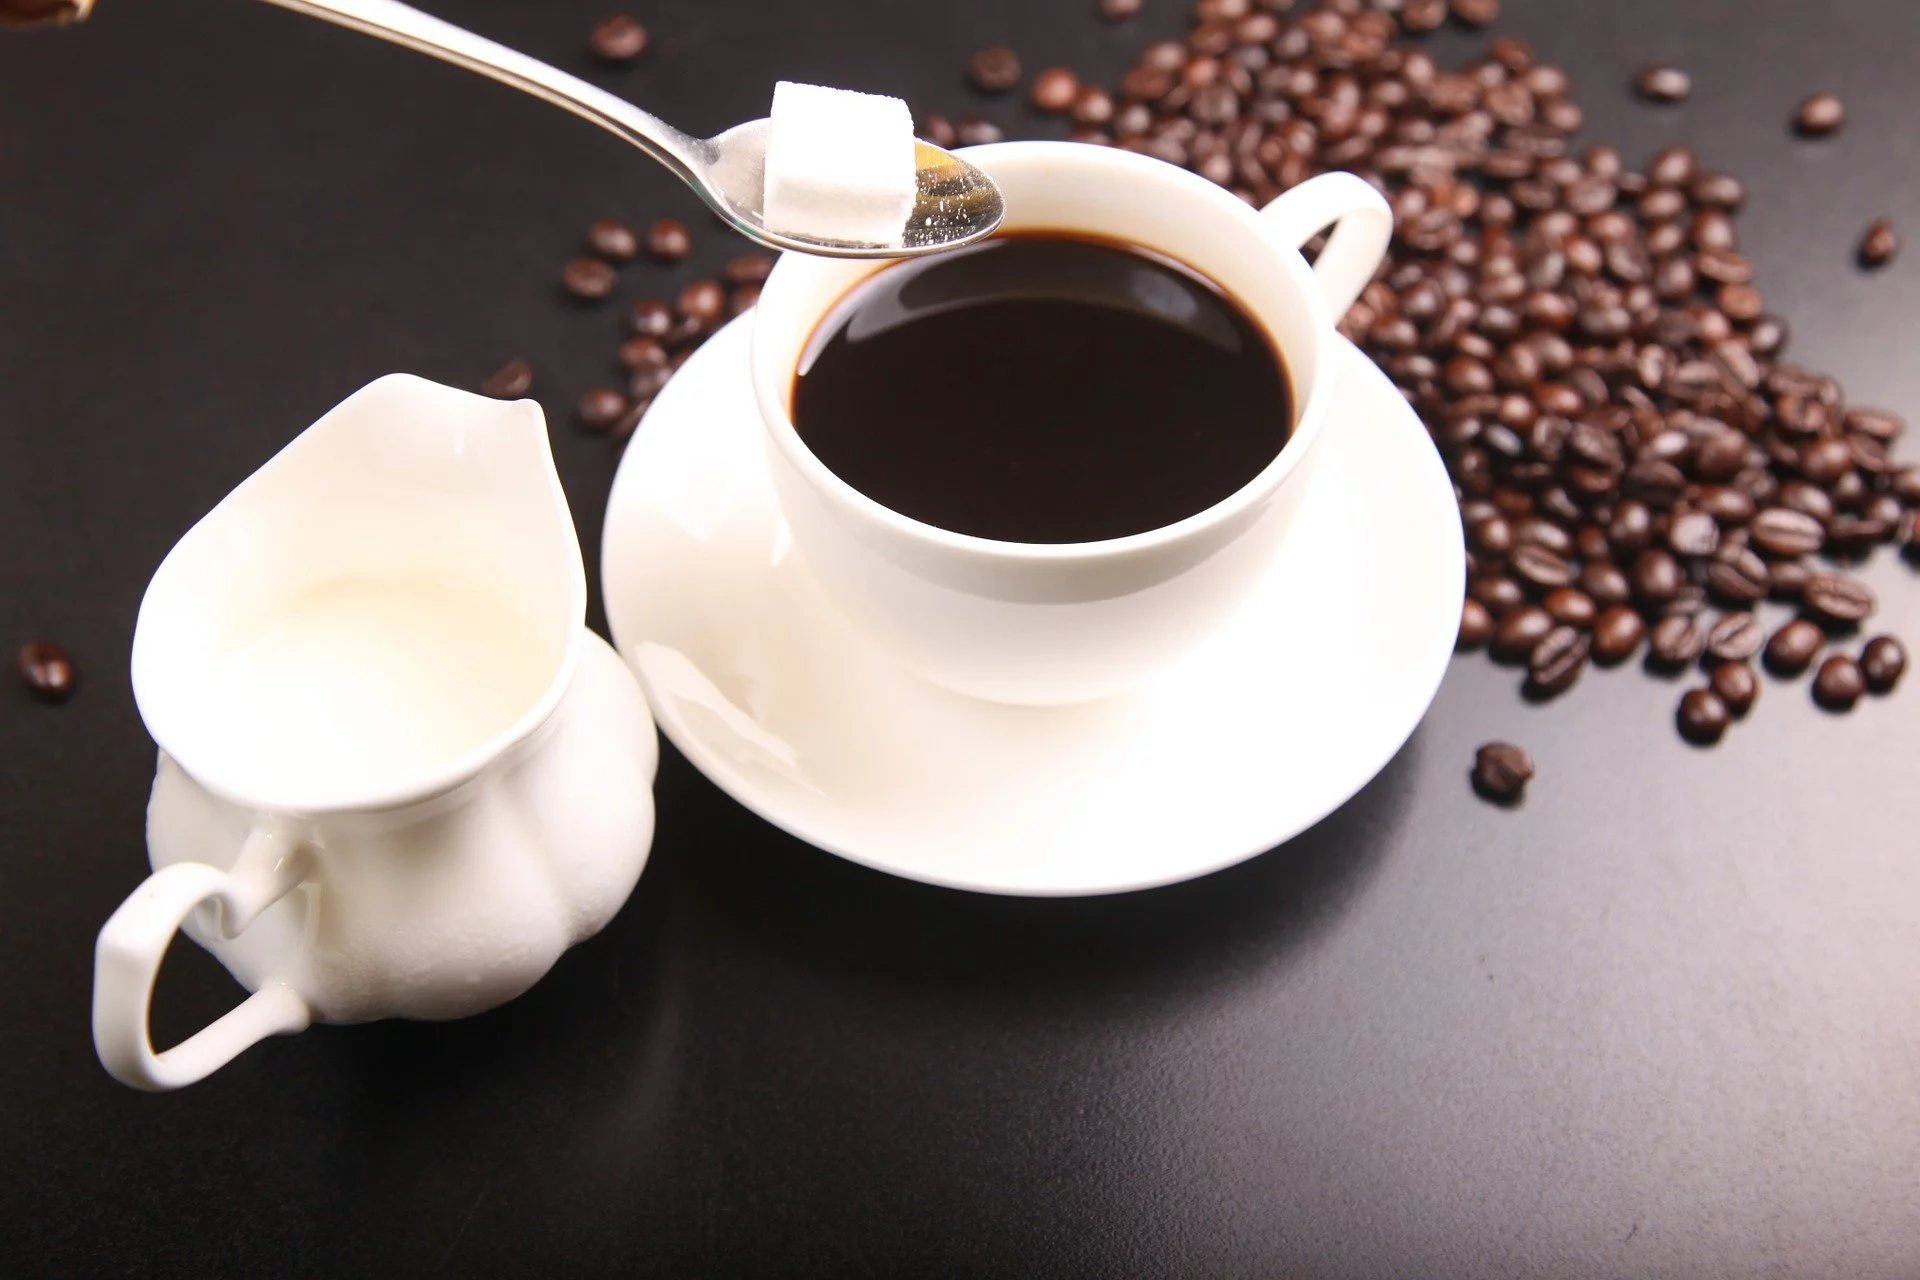 Reduce coffee consumption